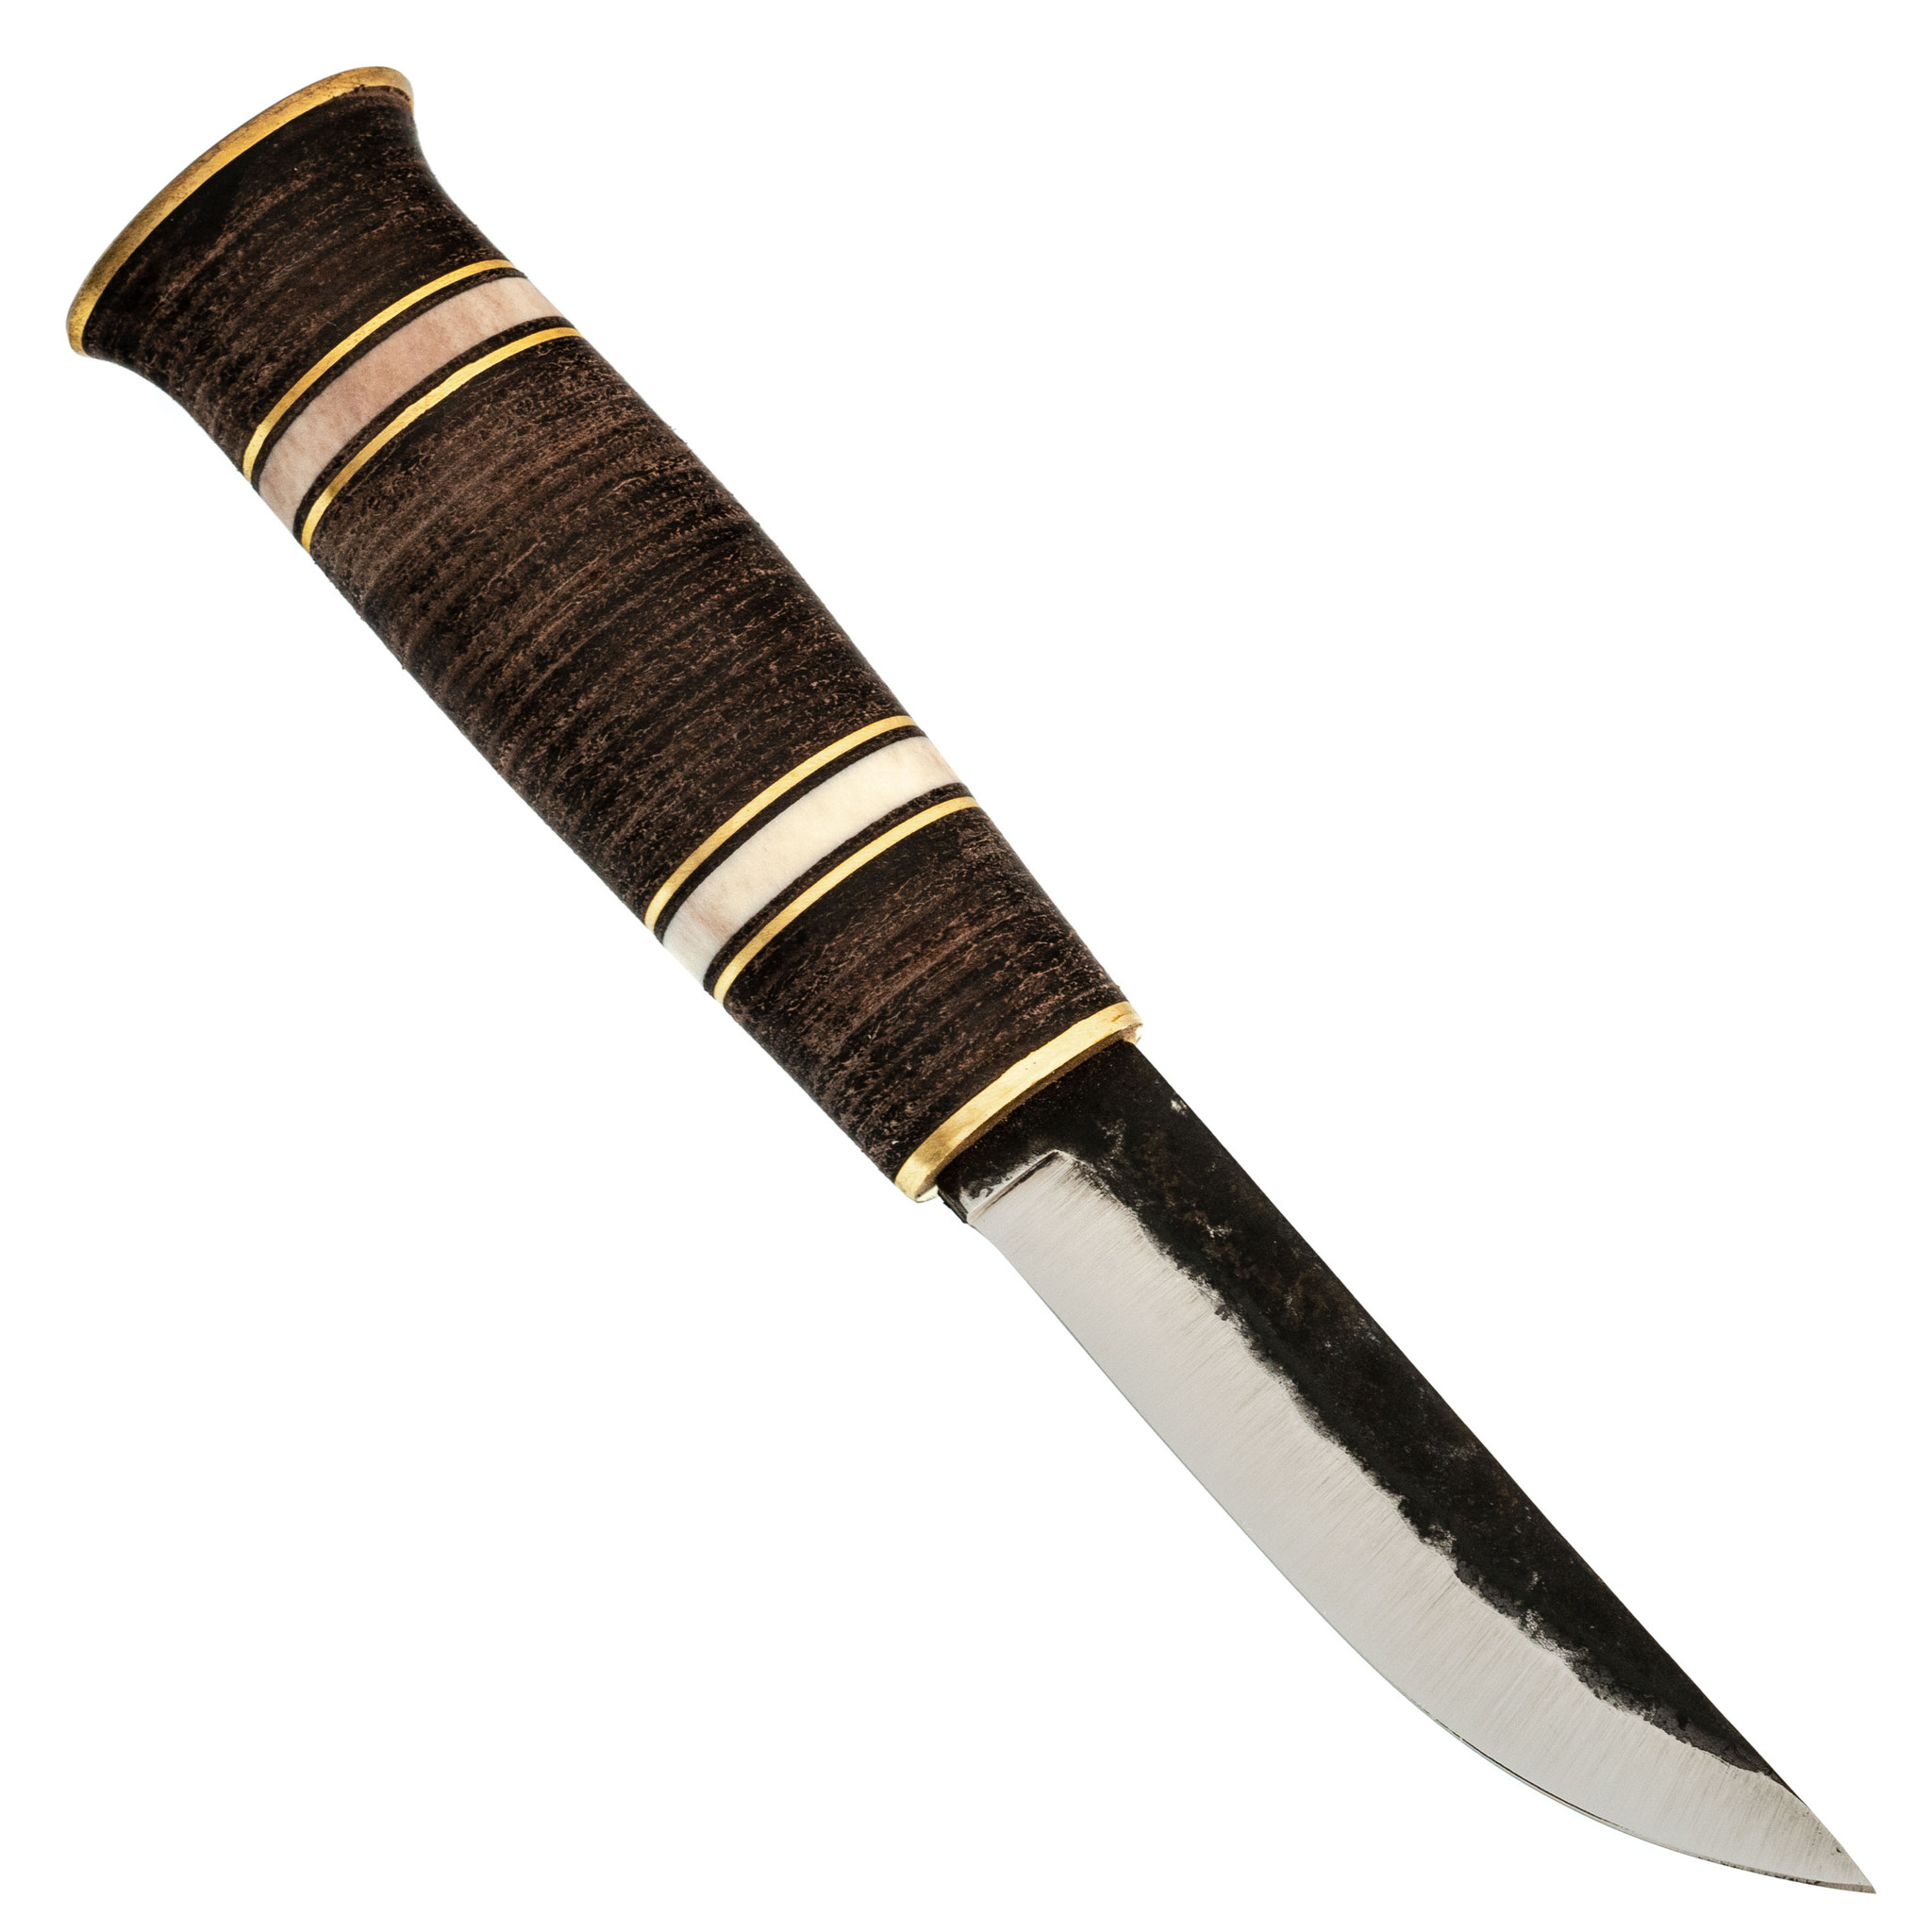 Нож Erpuu Puukko Leather 95, сталь 80CrV2, кожа/рог оленя - фото 3